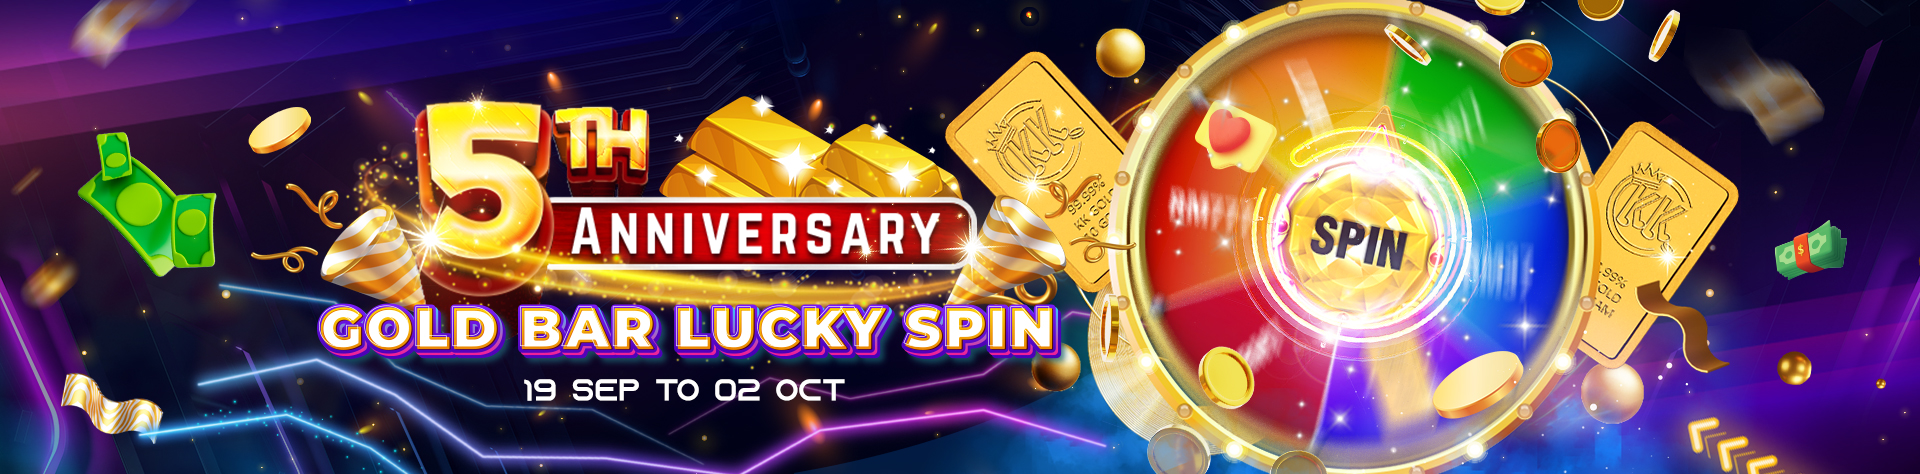 5th-Anniversary-Gold-Bar-Lucky-Spin.jpg